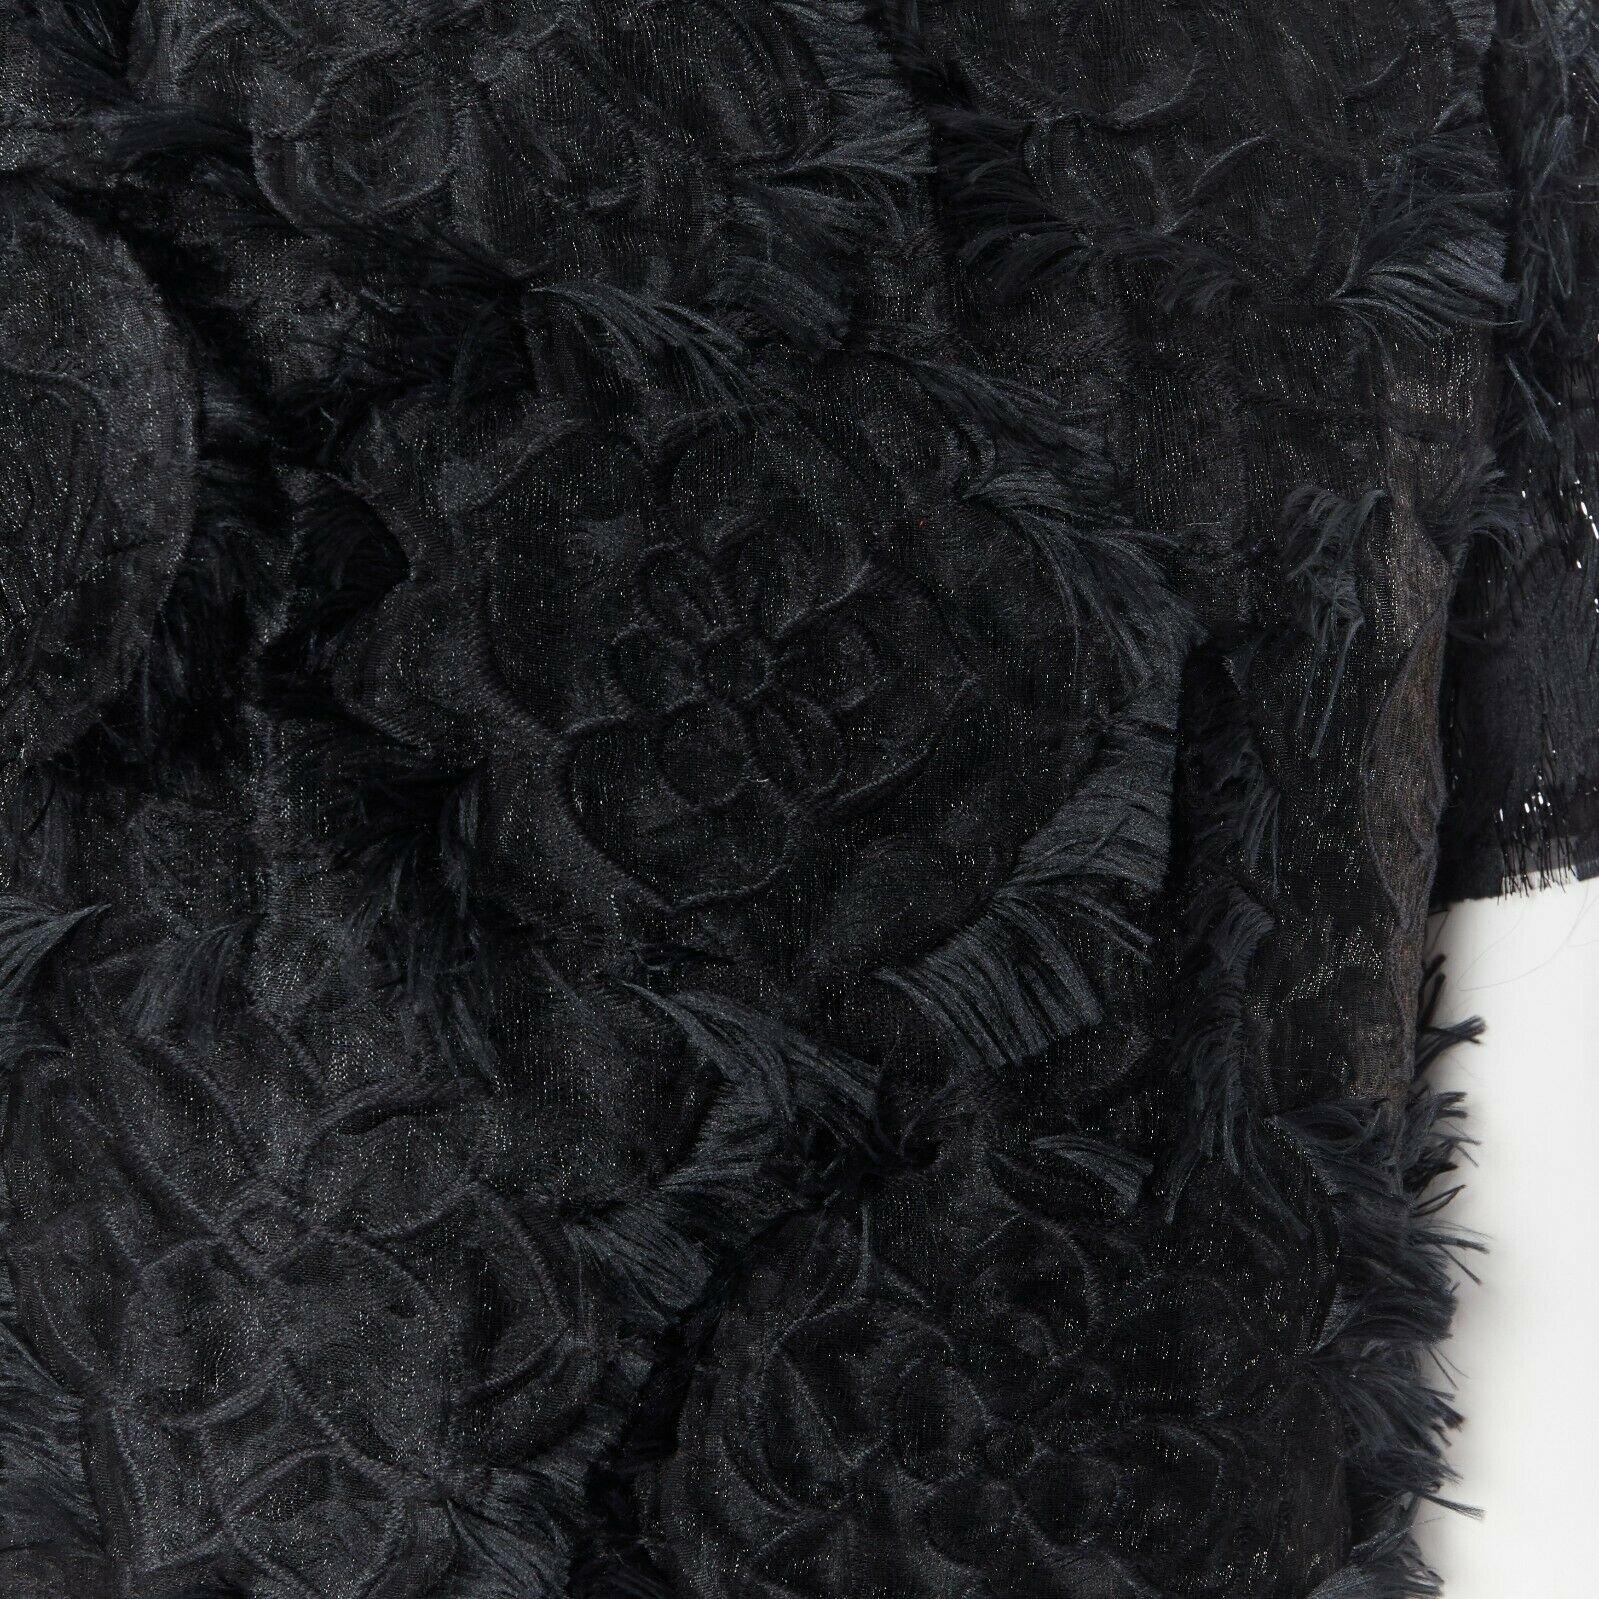 LANVIN ALBER ELBAZ 2014 black floral brocade shimmery textured fringed top FR34 4